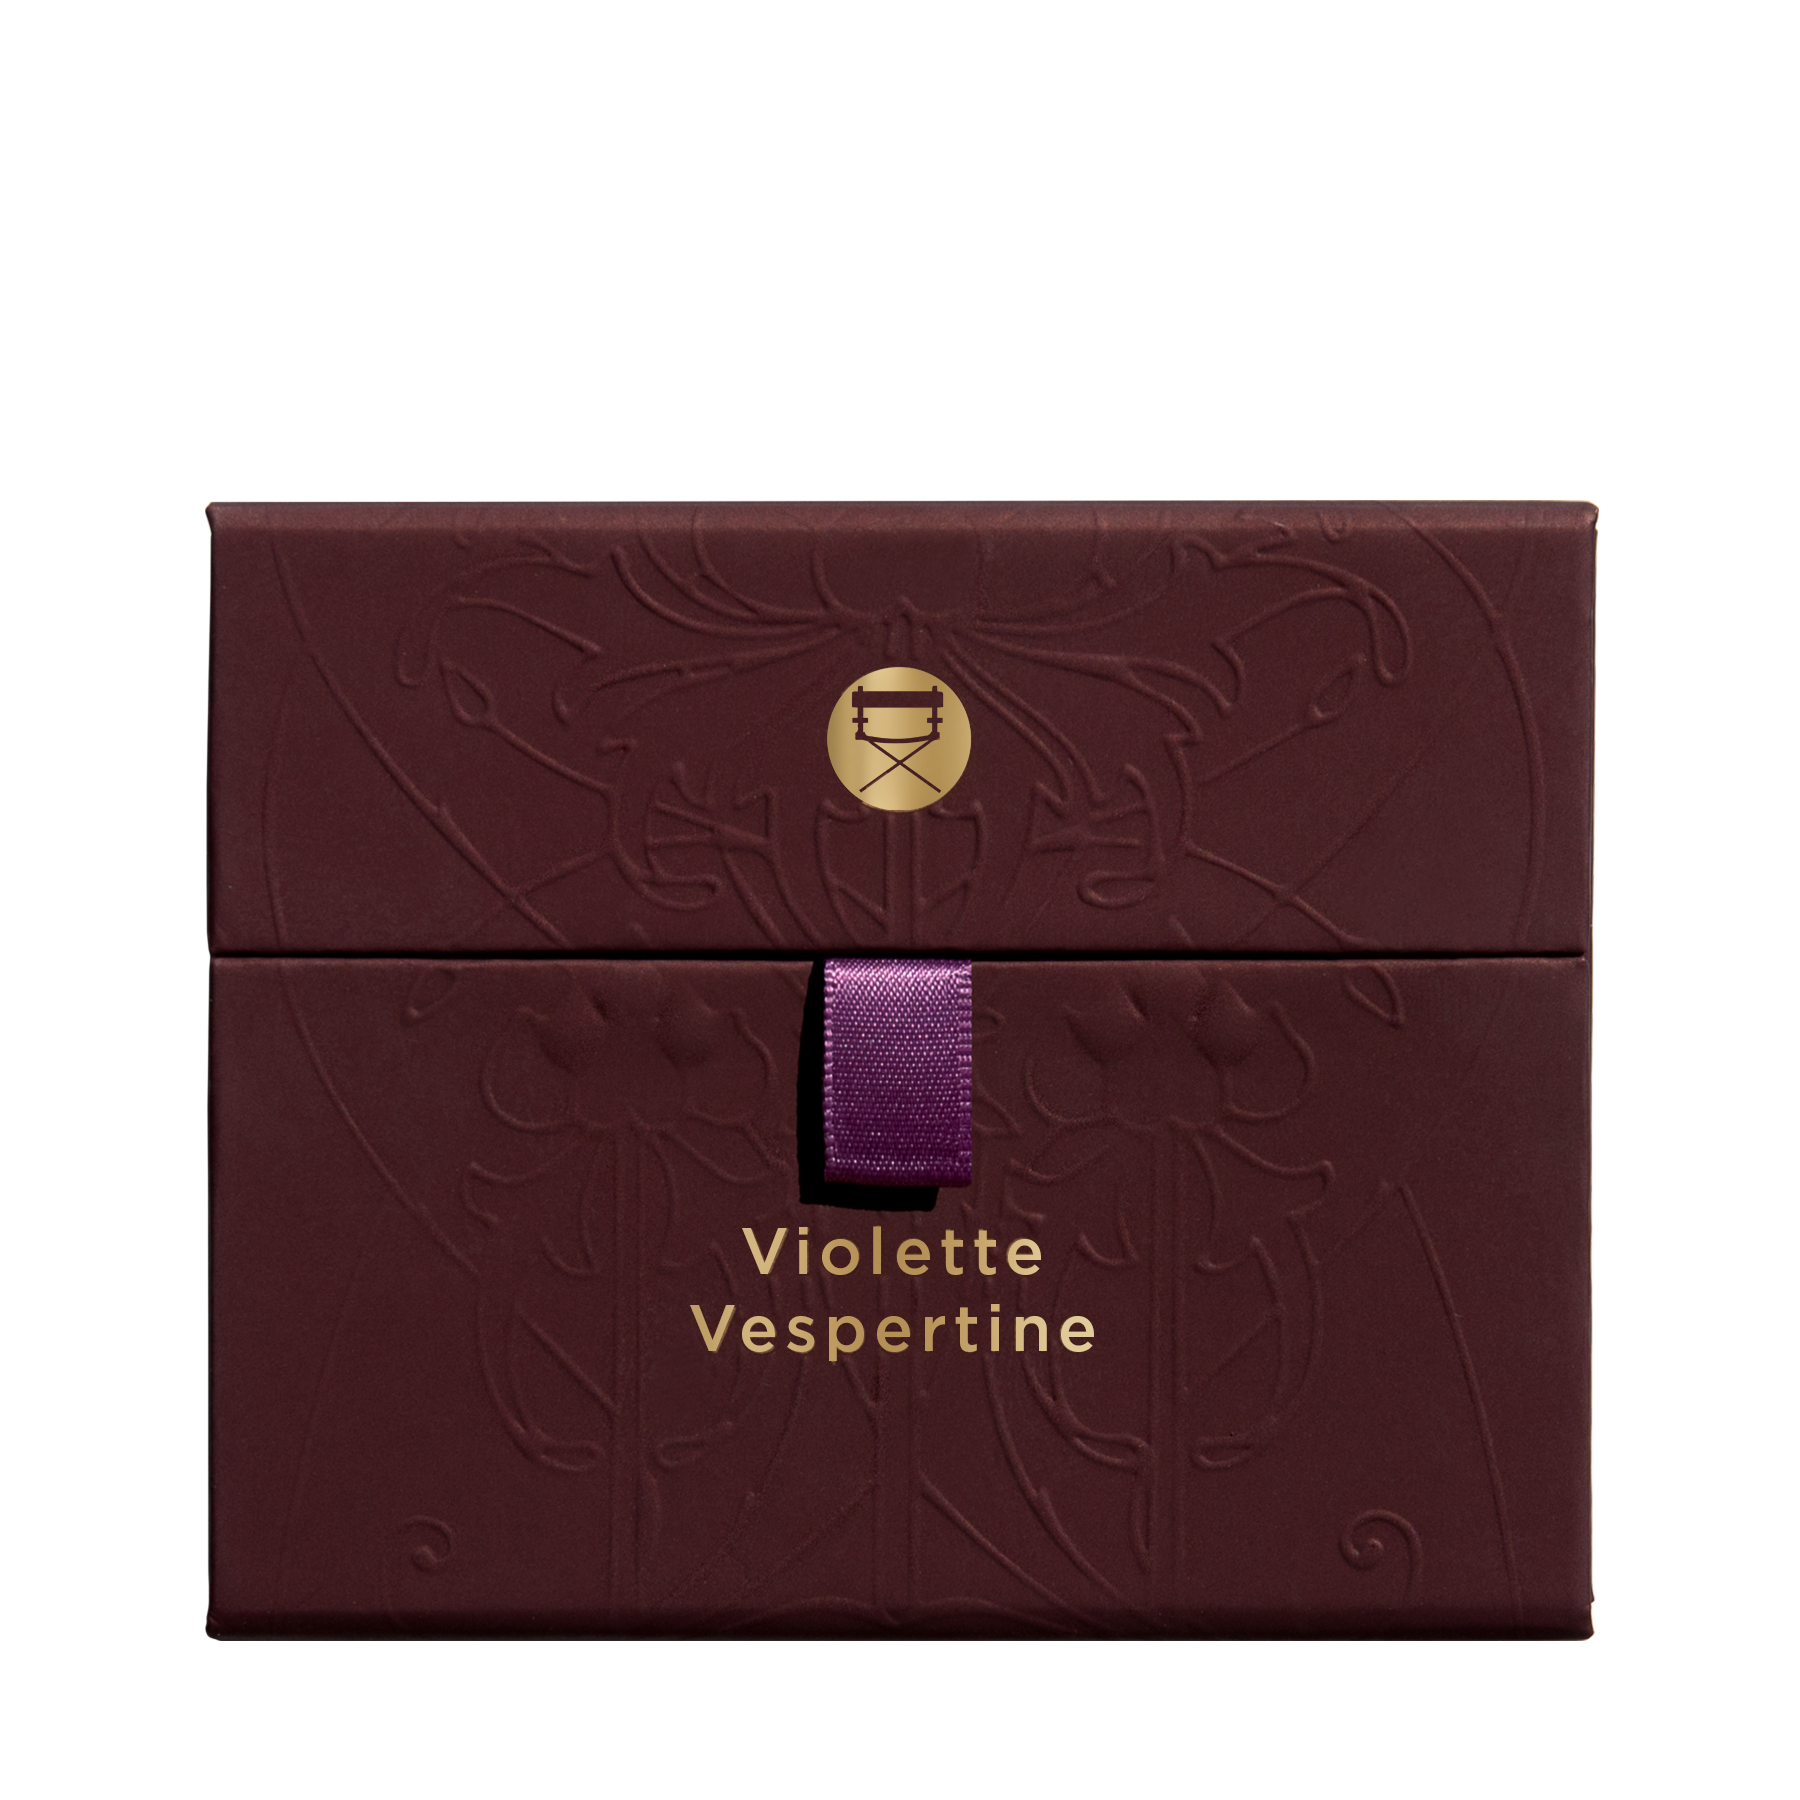 Viseart Paris Violette Vespertine Etendu Case